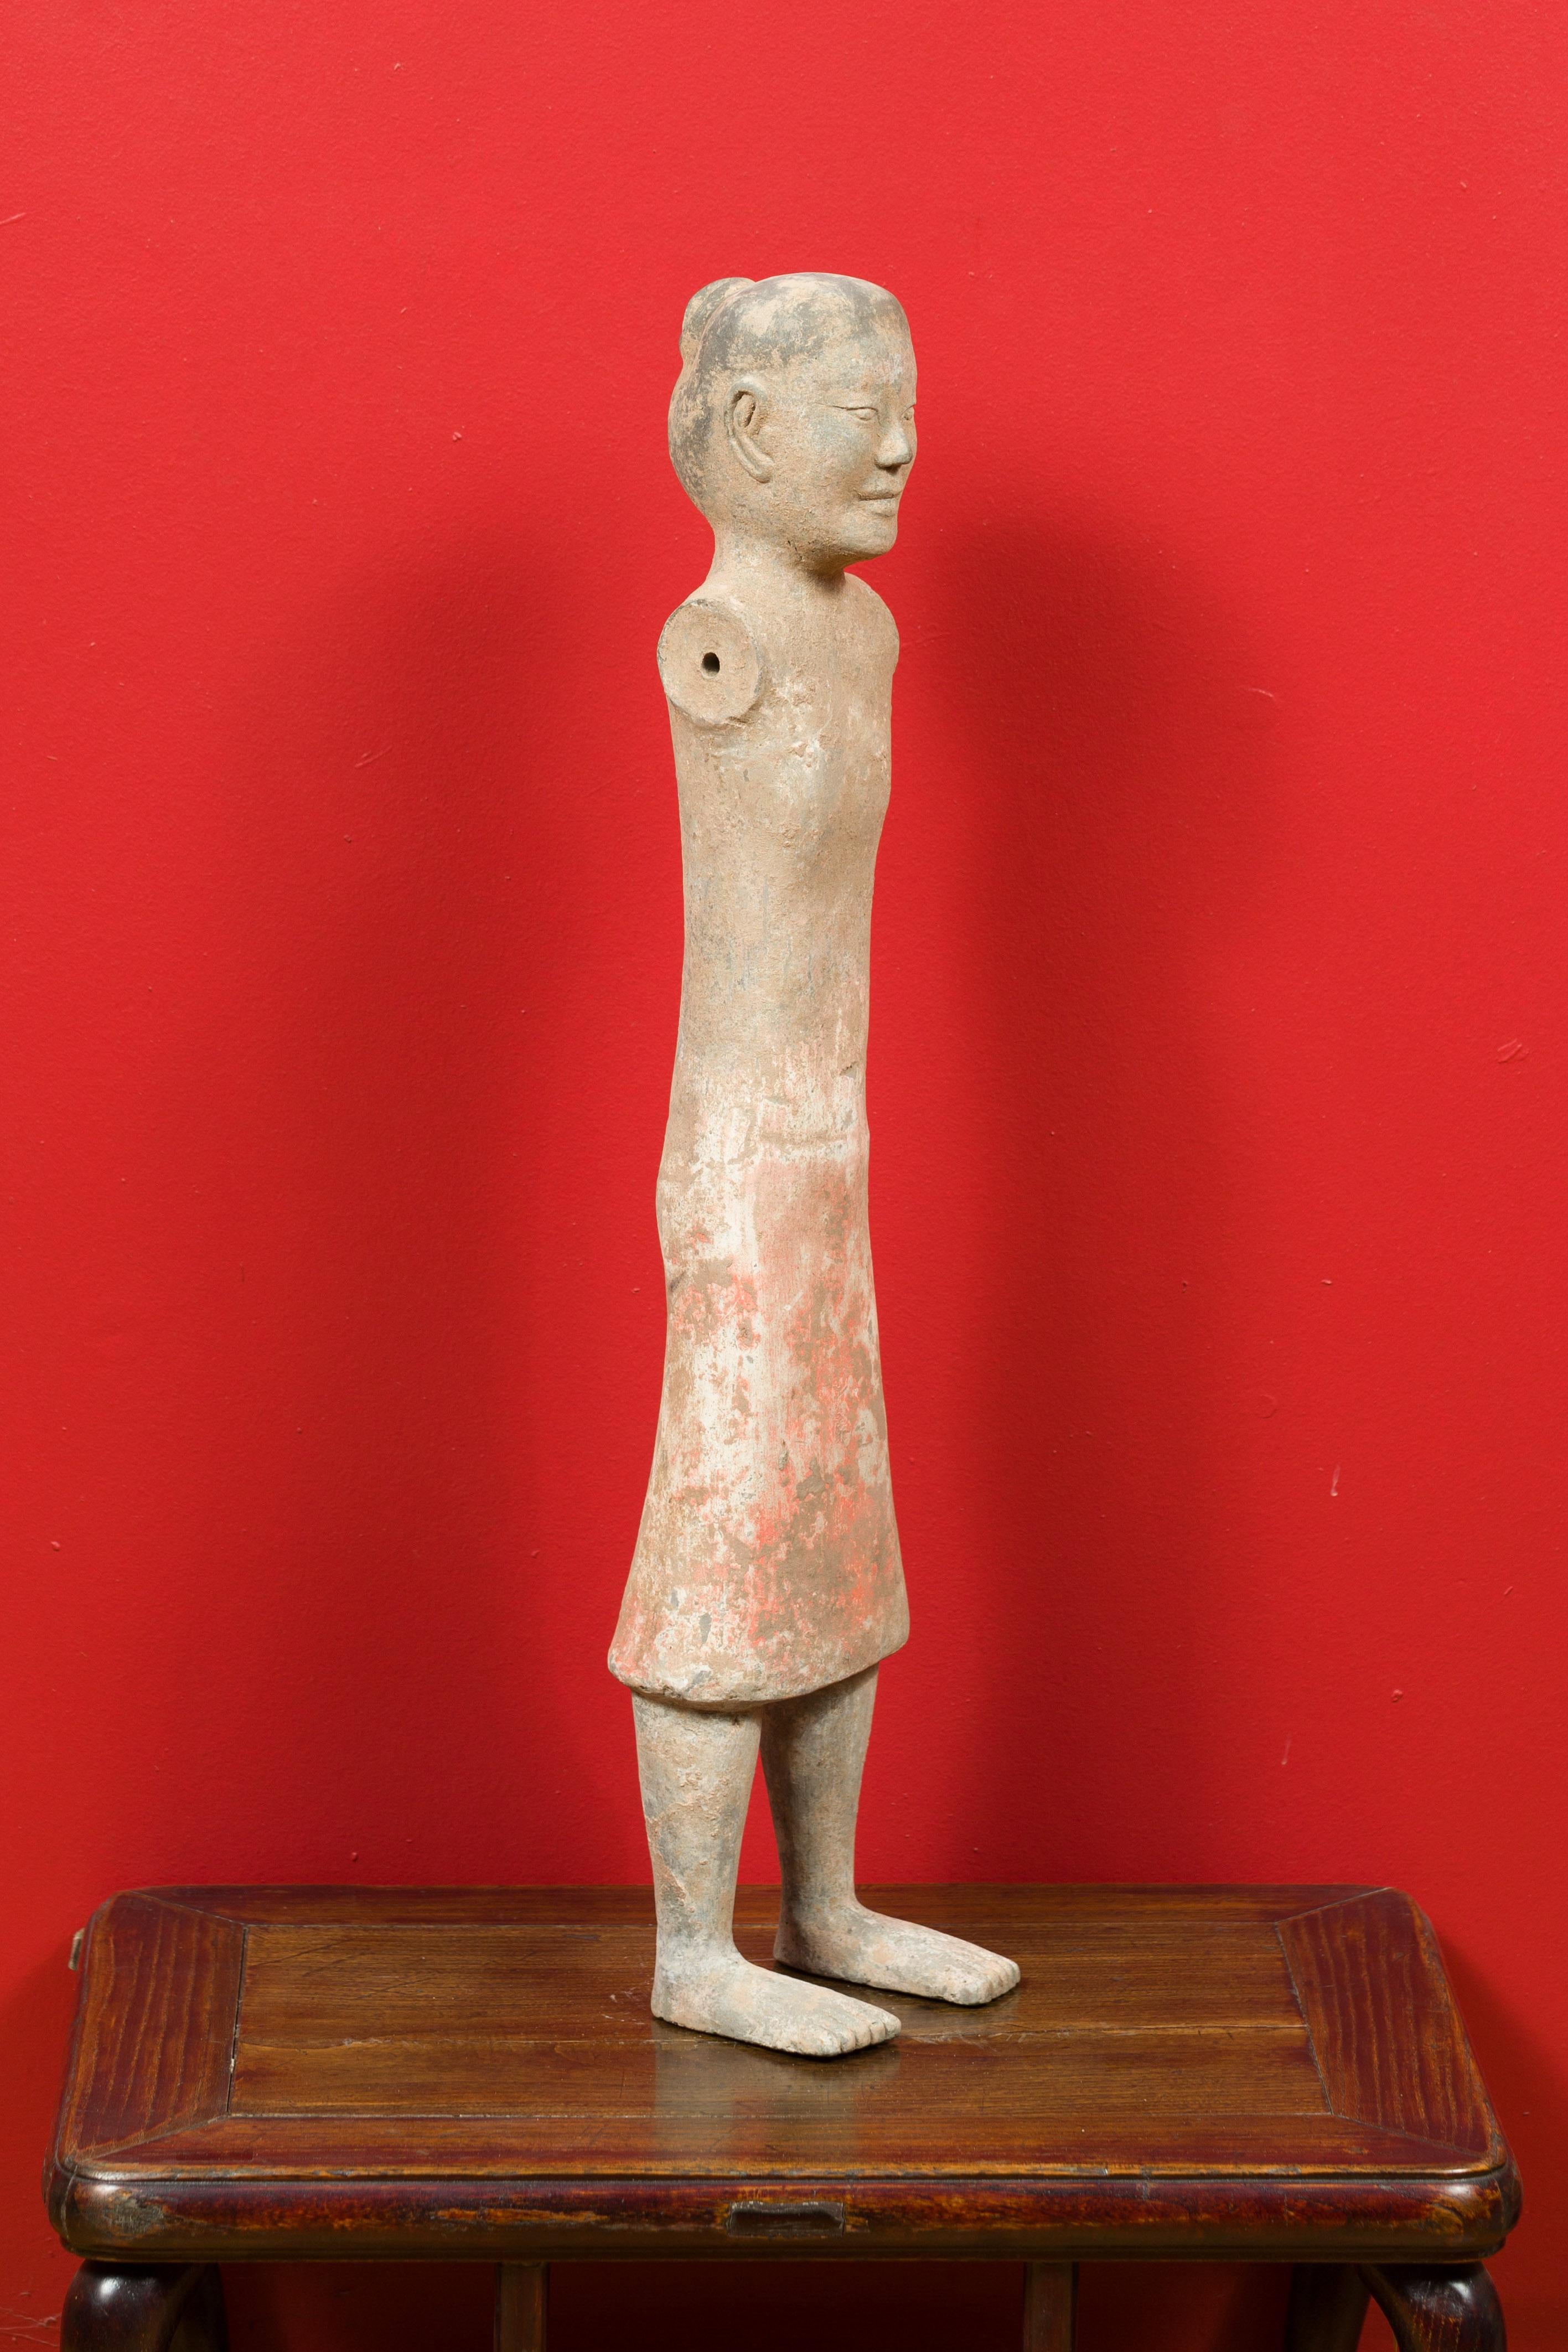 Western Han Dynasty 206 BC-24 AD Chinese Figurine with Original Polychromy 5